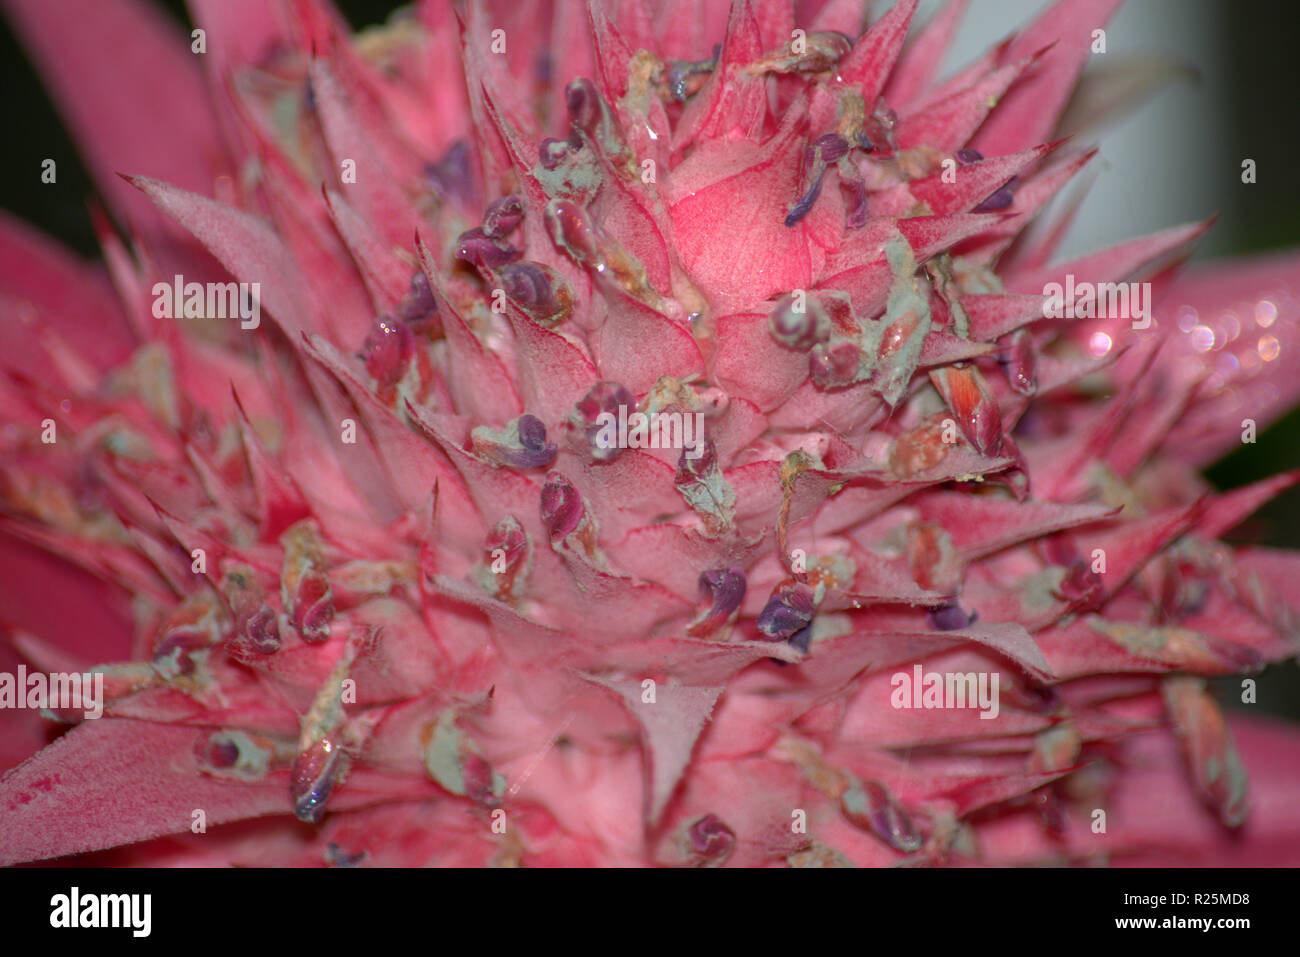 Pink chrysanthemum flower, full frame Stock Photo